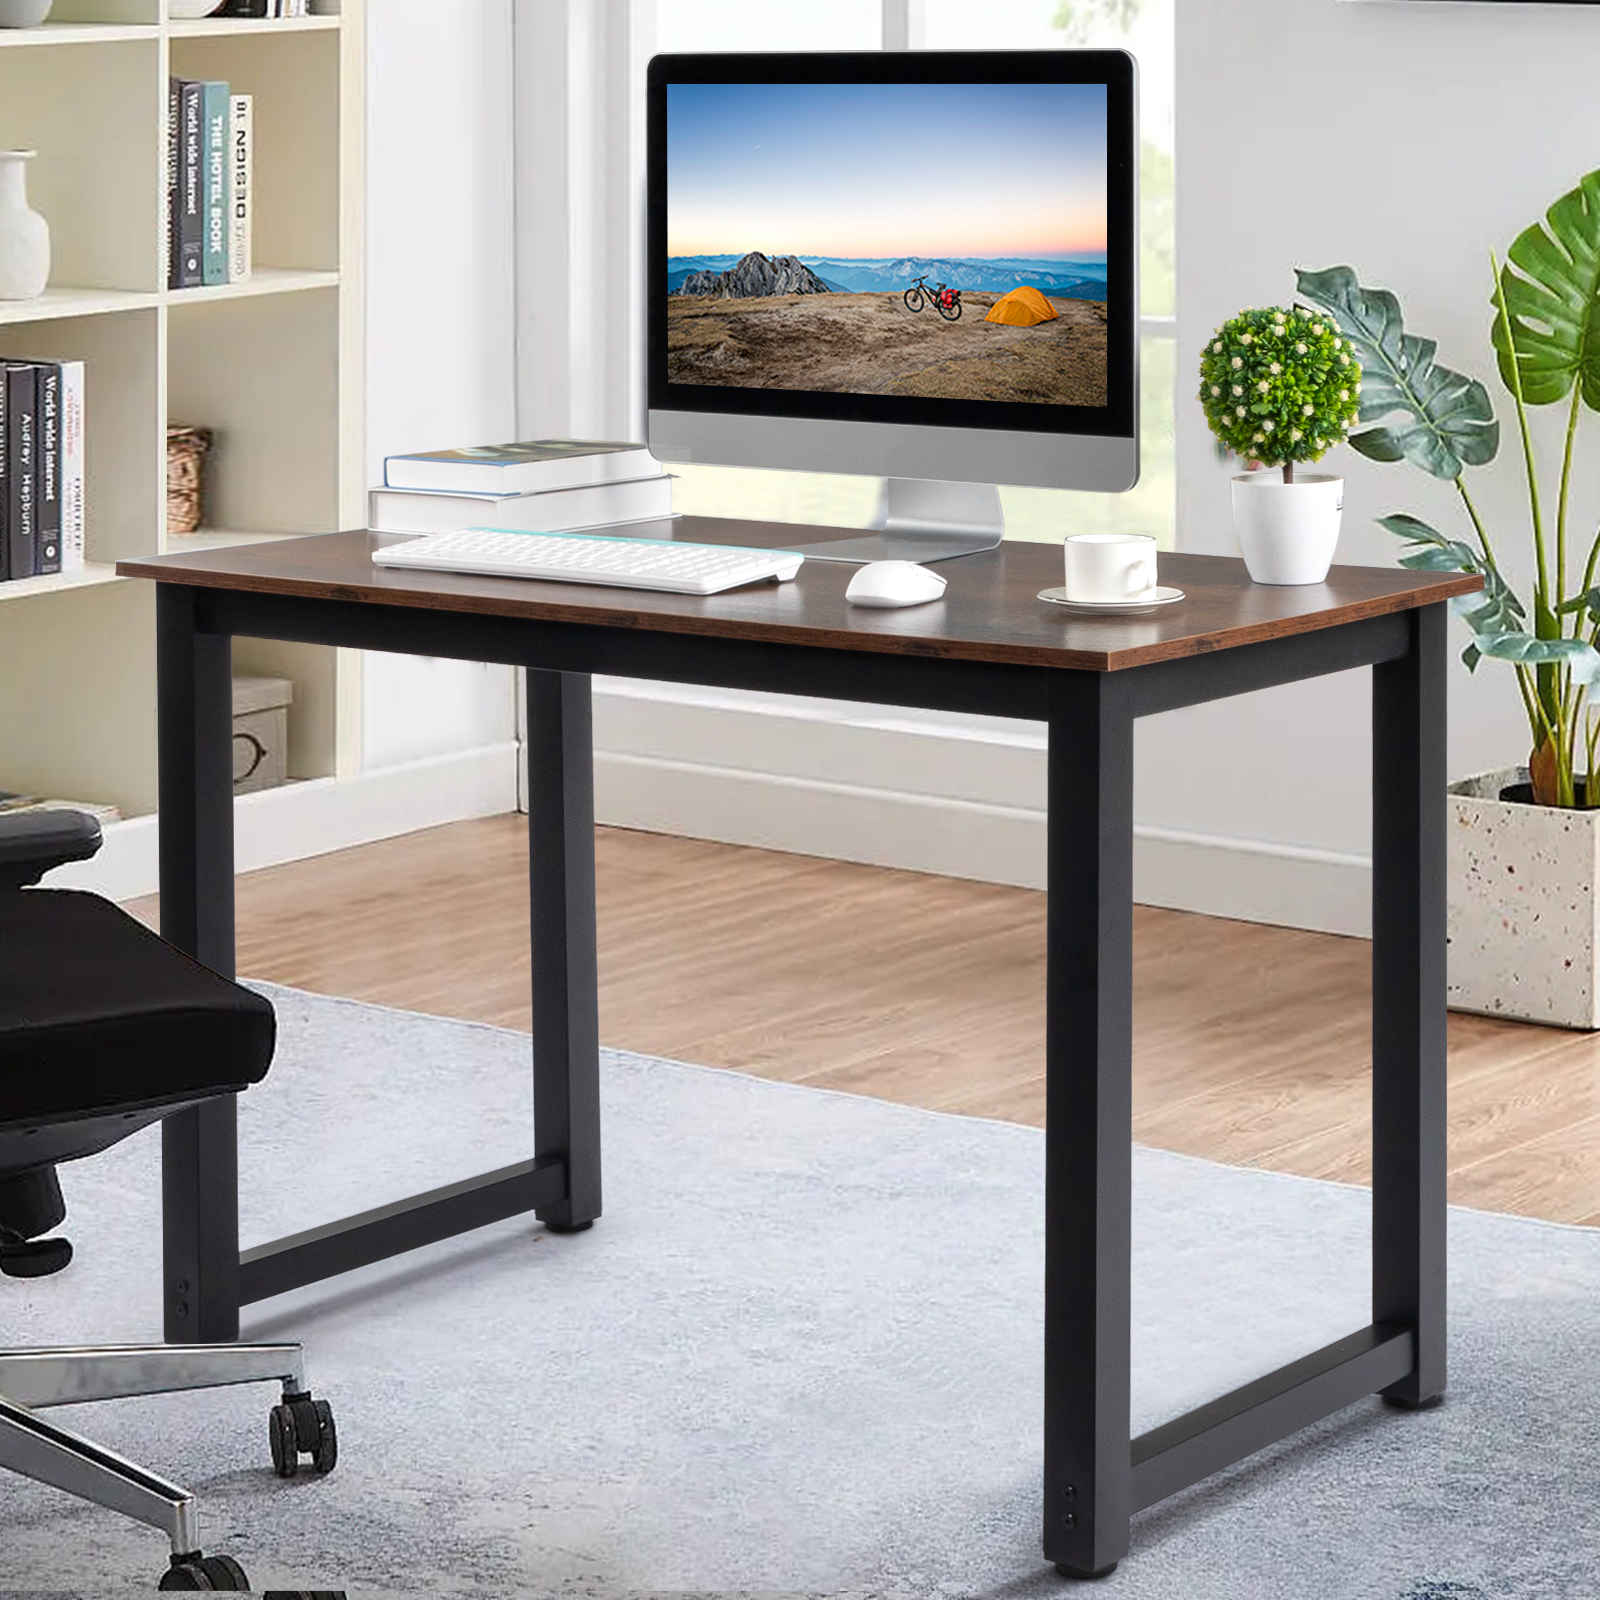 Ktaxon Wood Computer Desk PC Laptop Study Table Workstation Home Office Furniture - image 4 of 13